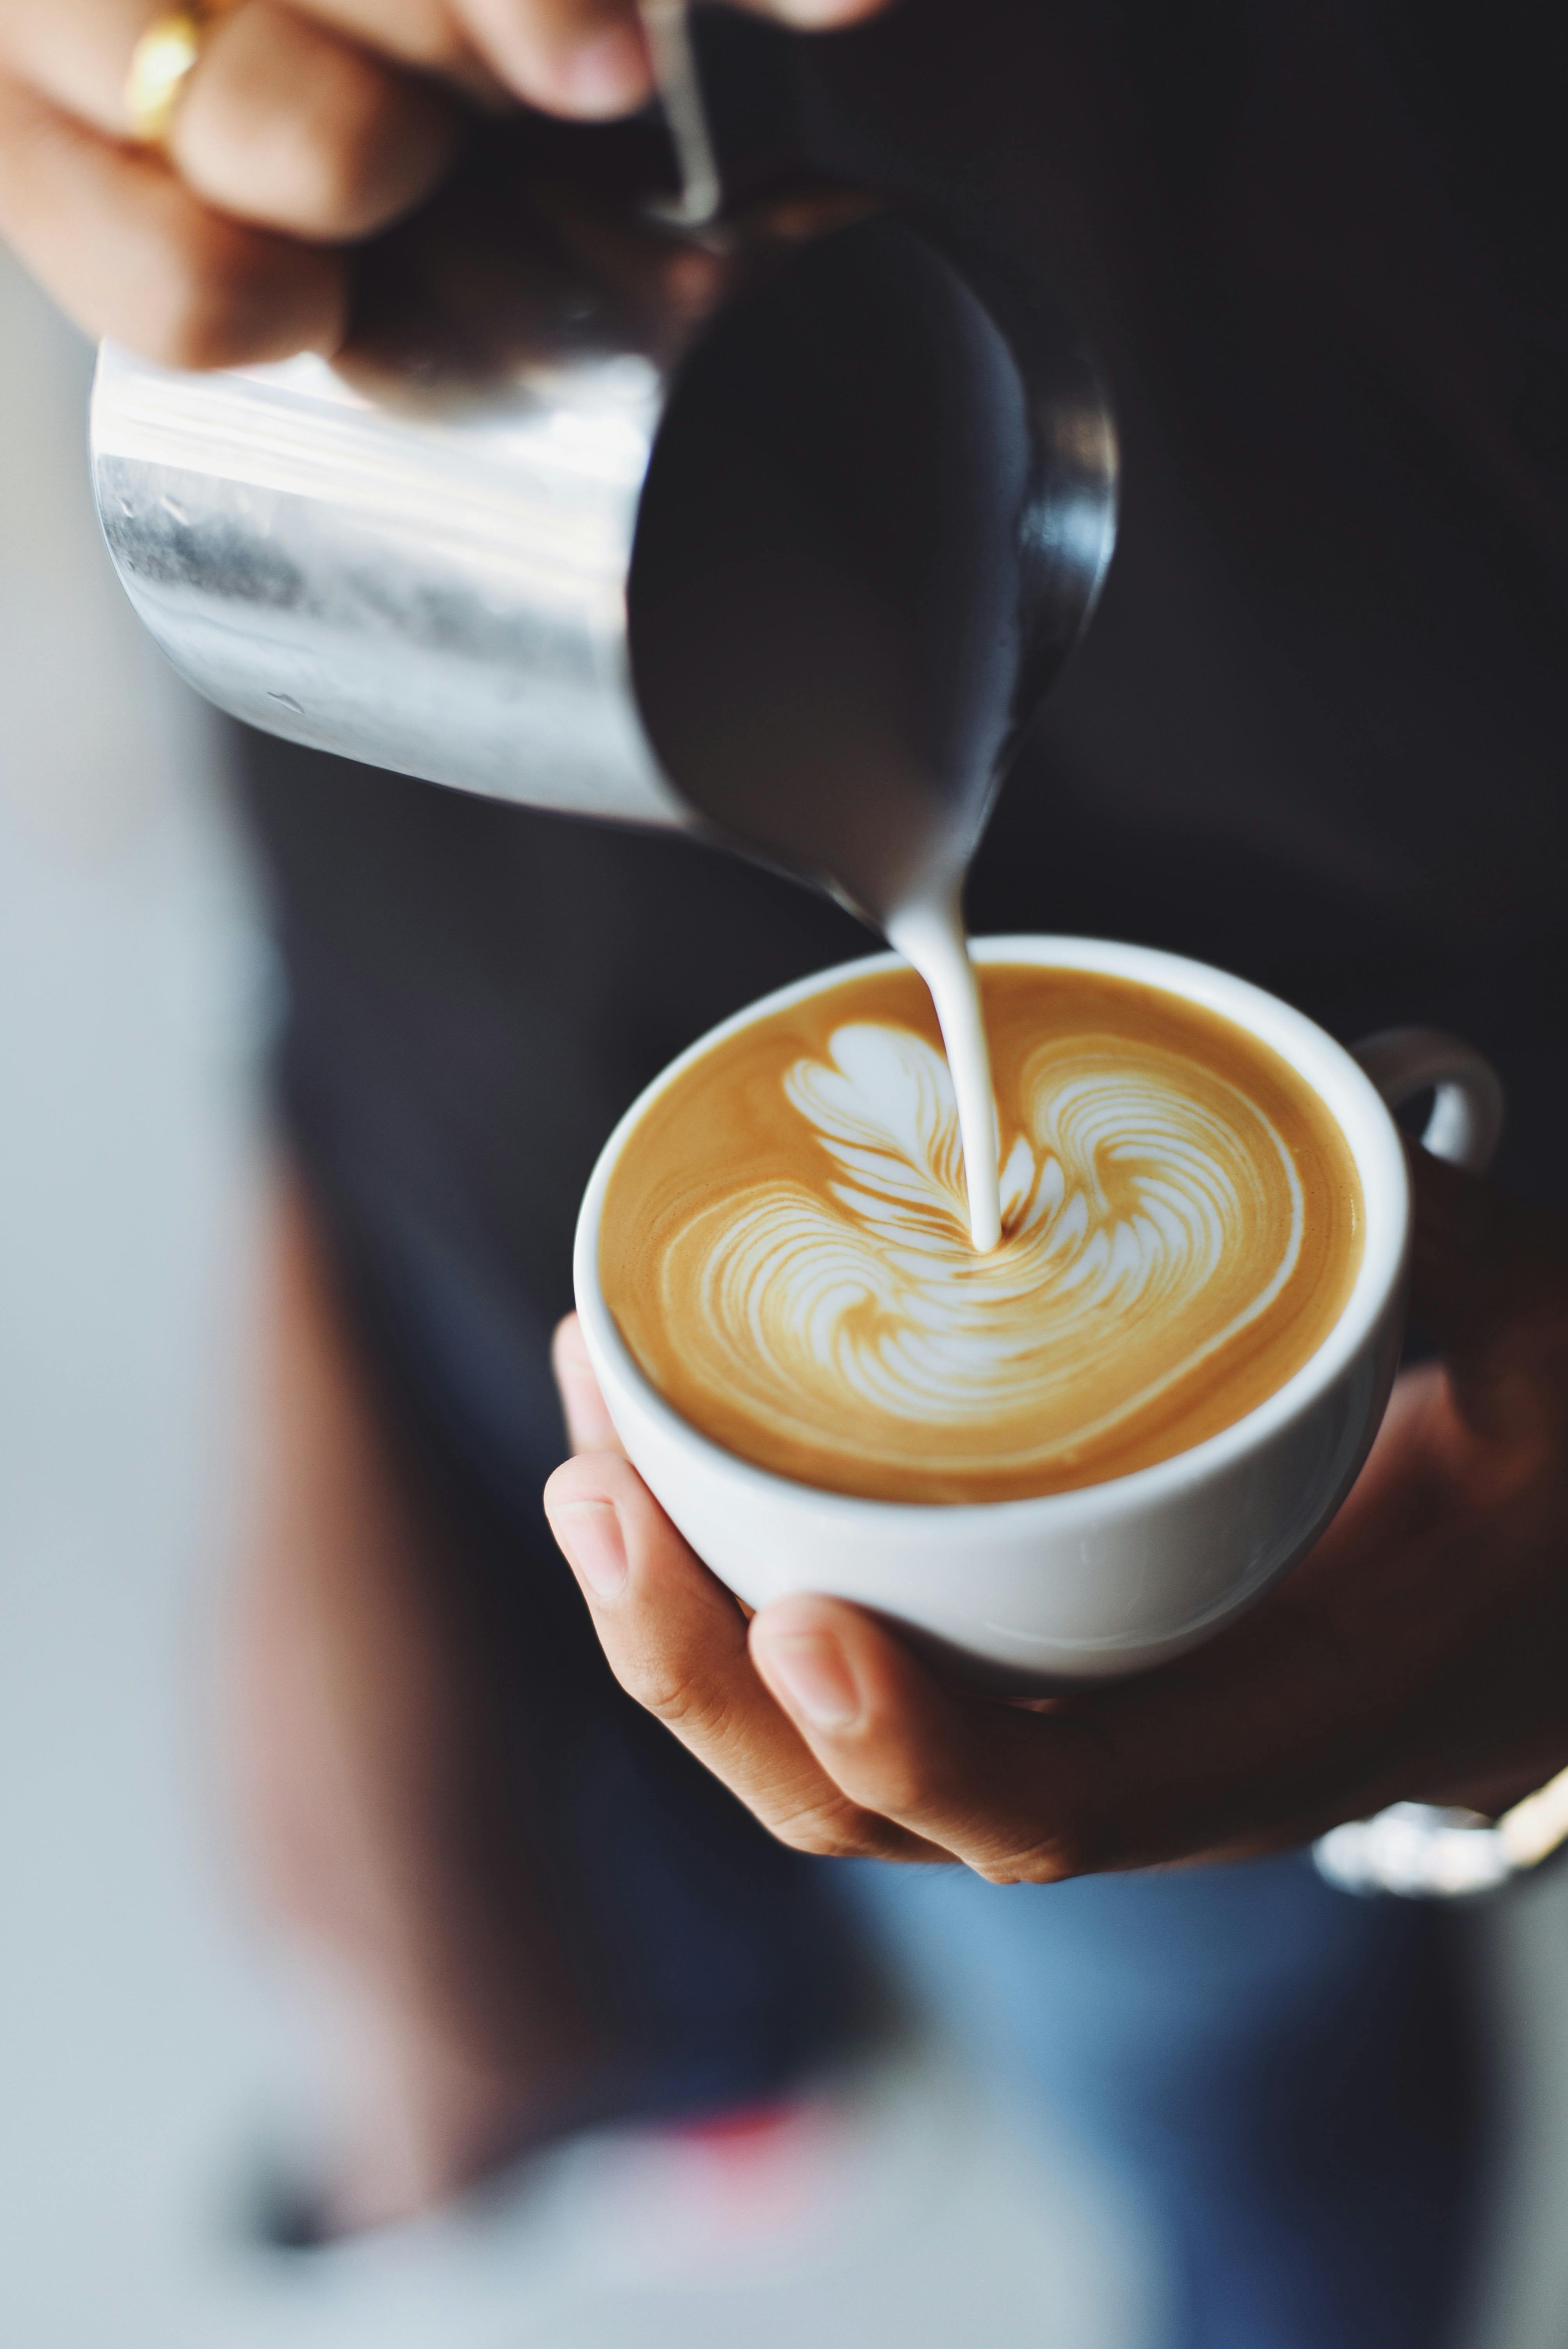 Latte Art Photos, Download The BEST Free Latte Art Stock Photos